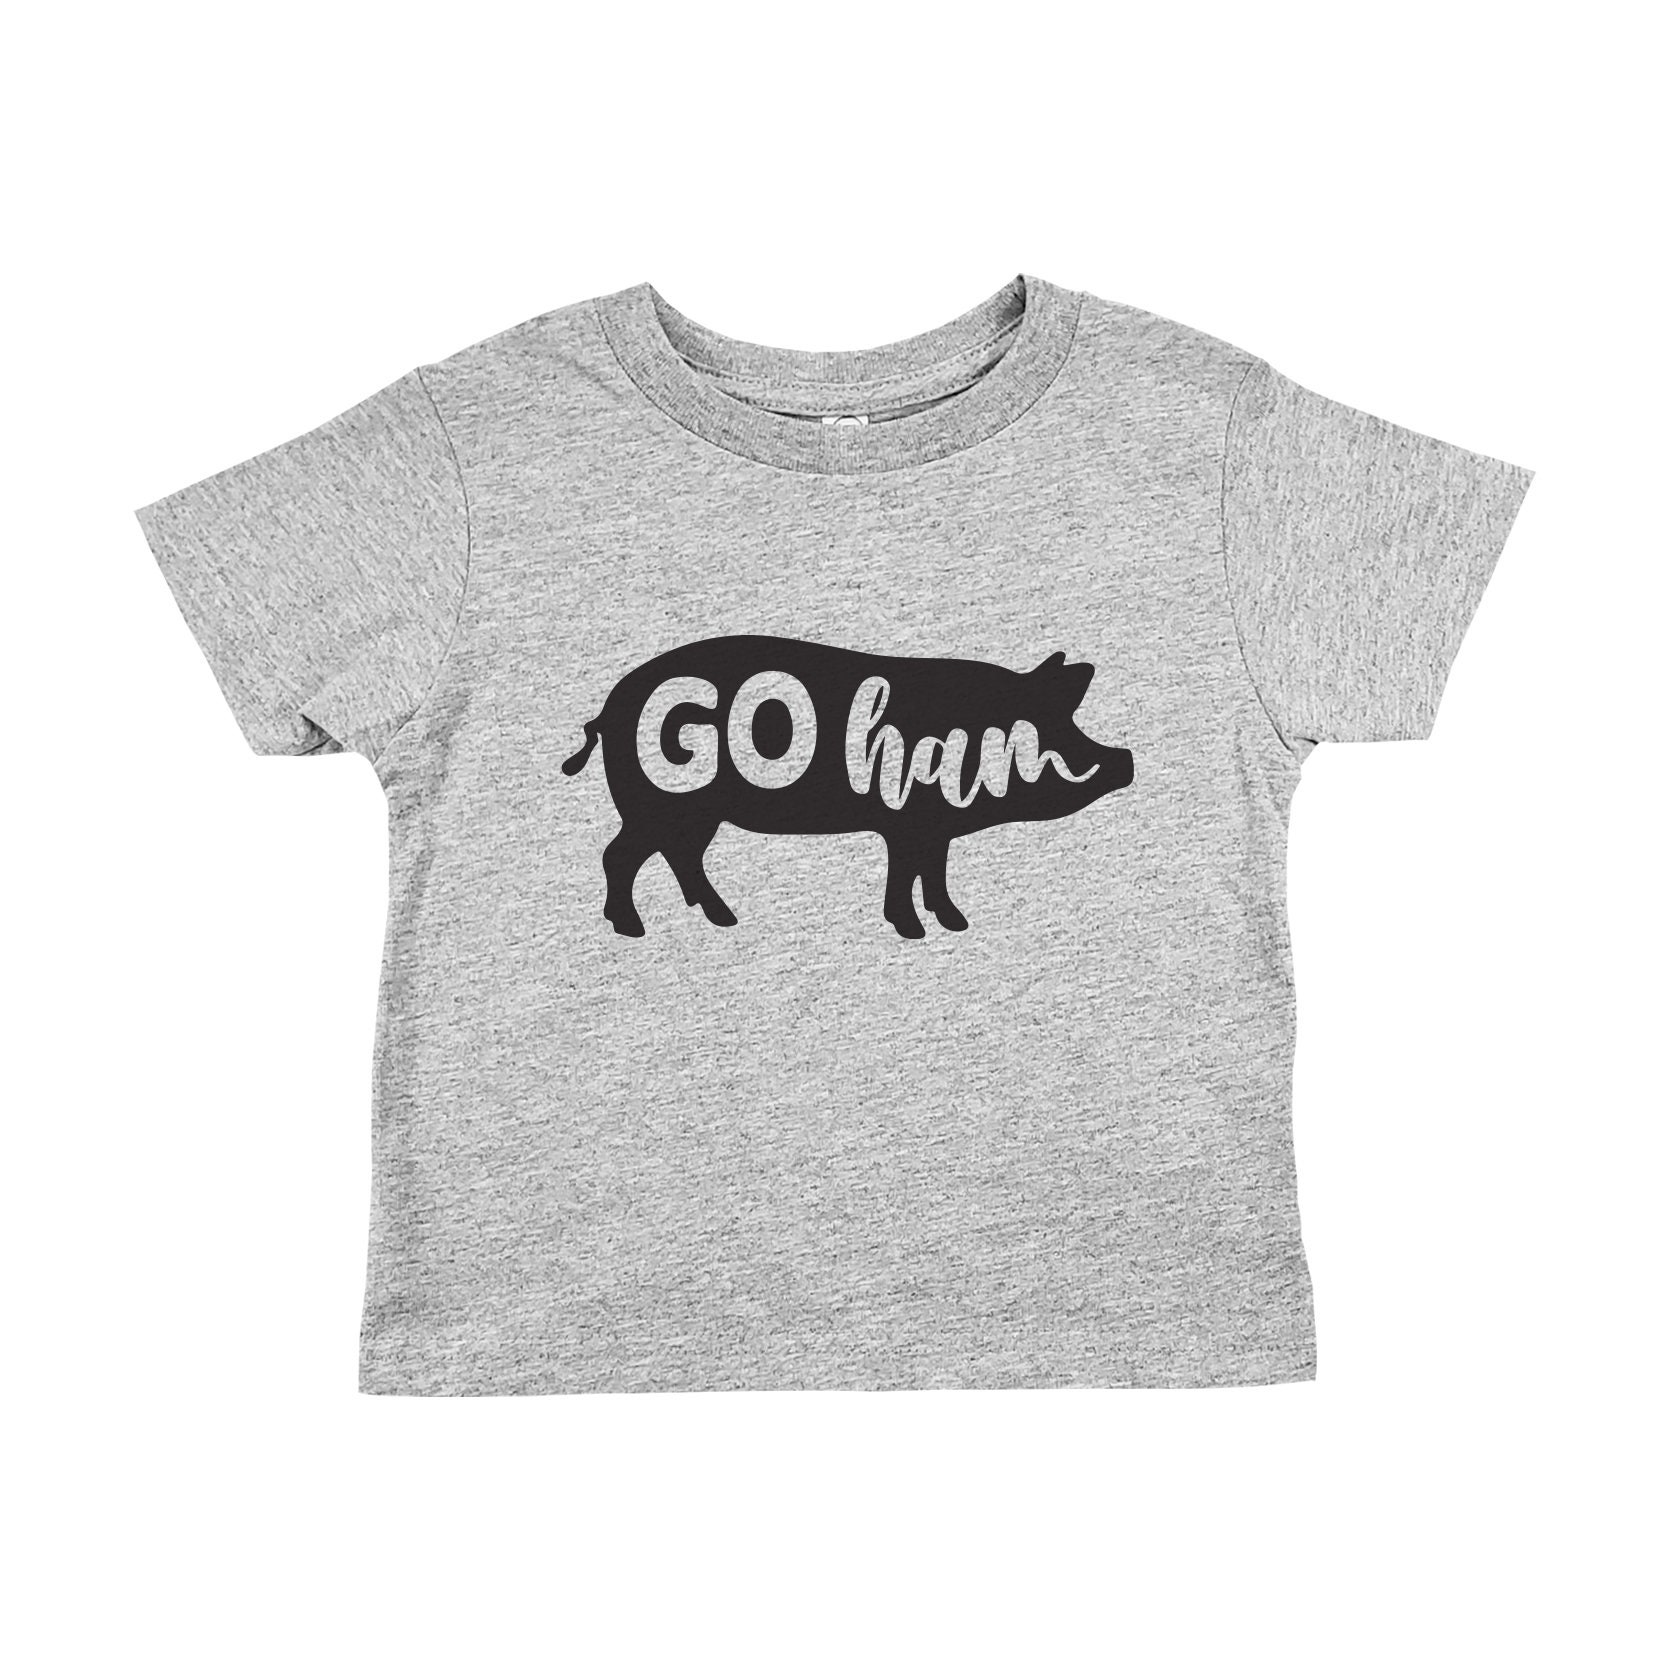 Go Ham Toddler Tee Shirt Cute Pig Childs Shirt 2T 4T | Etsy